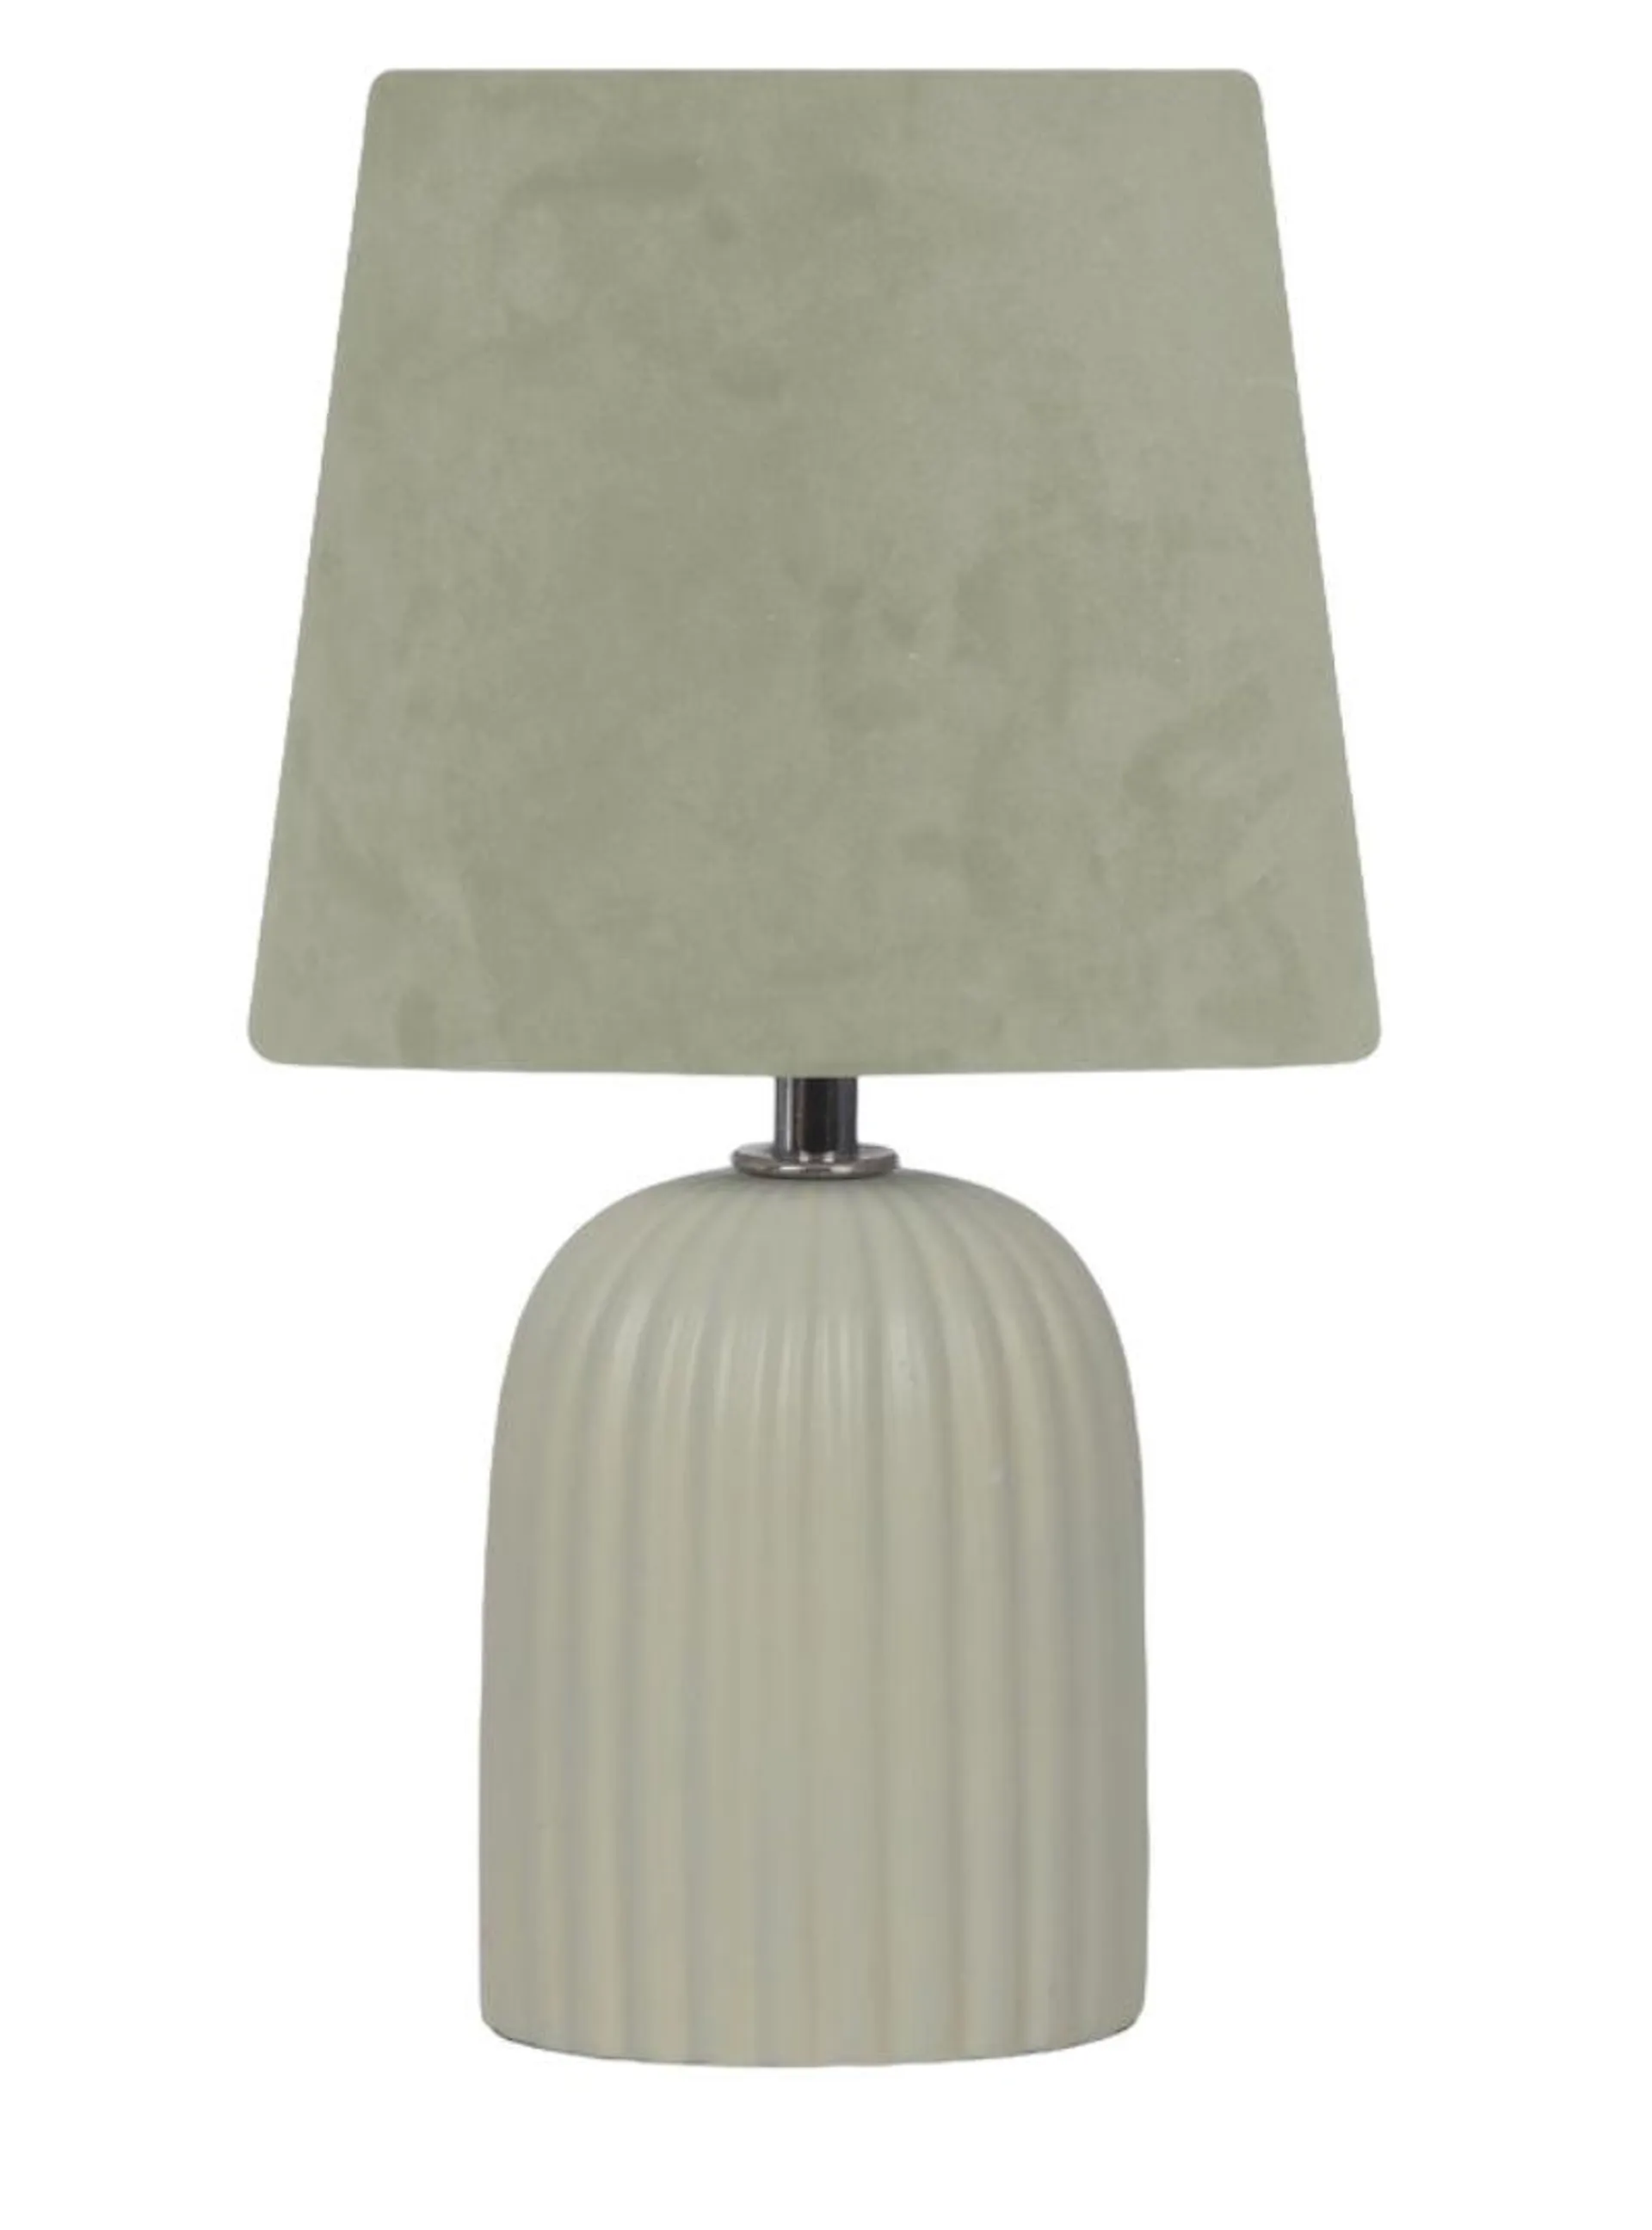 Table lamp ceramic-based